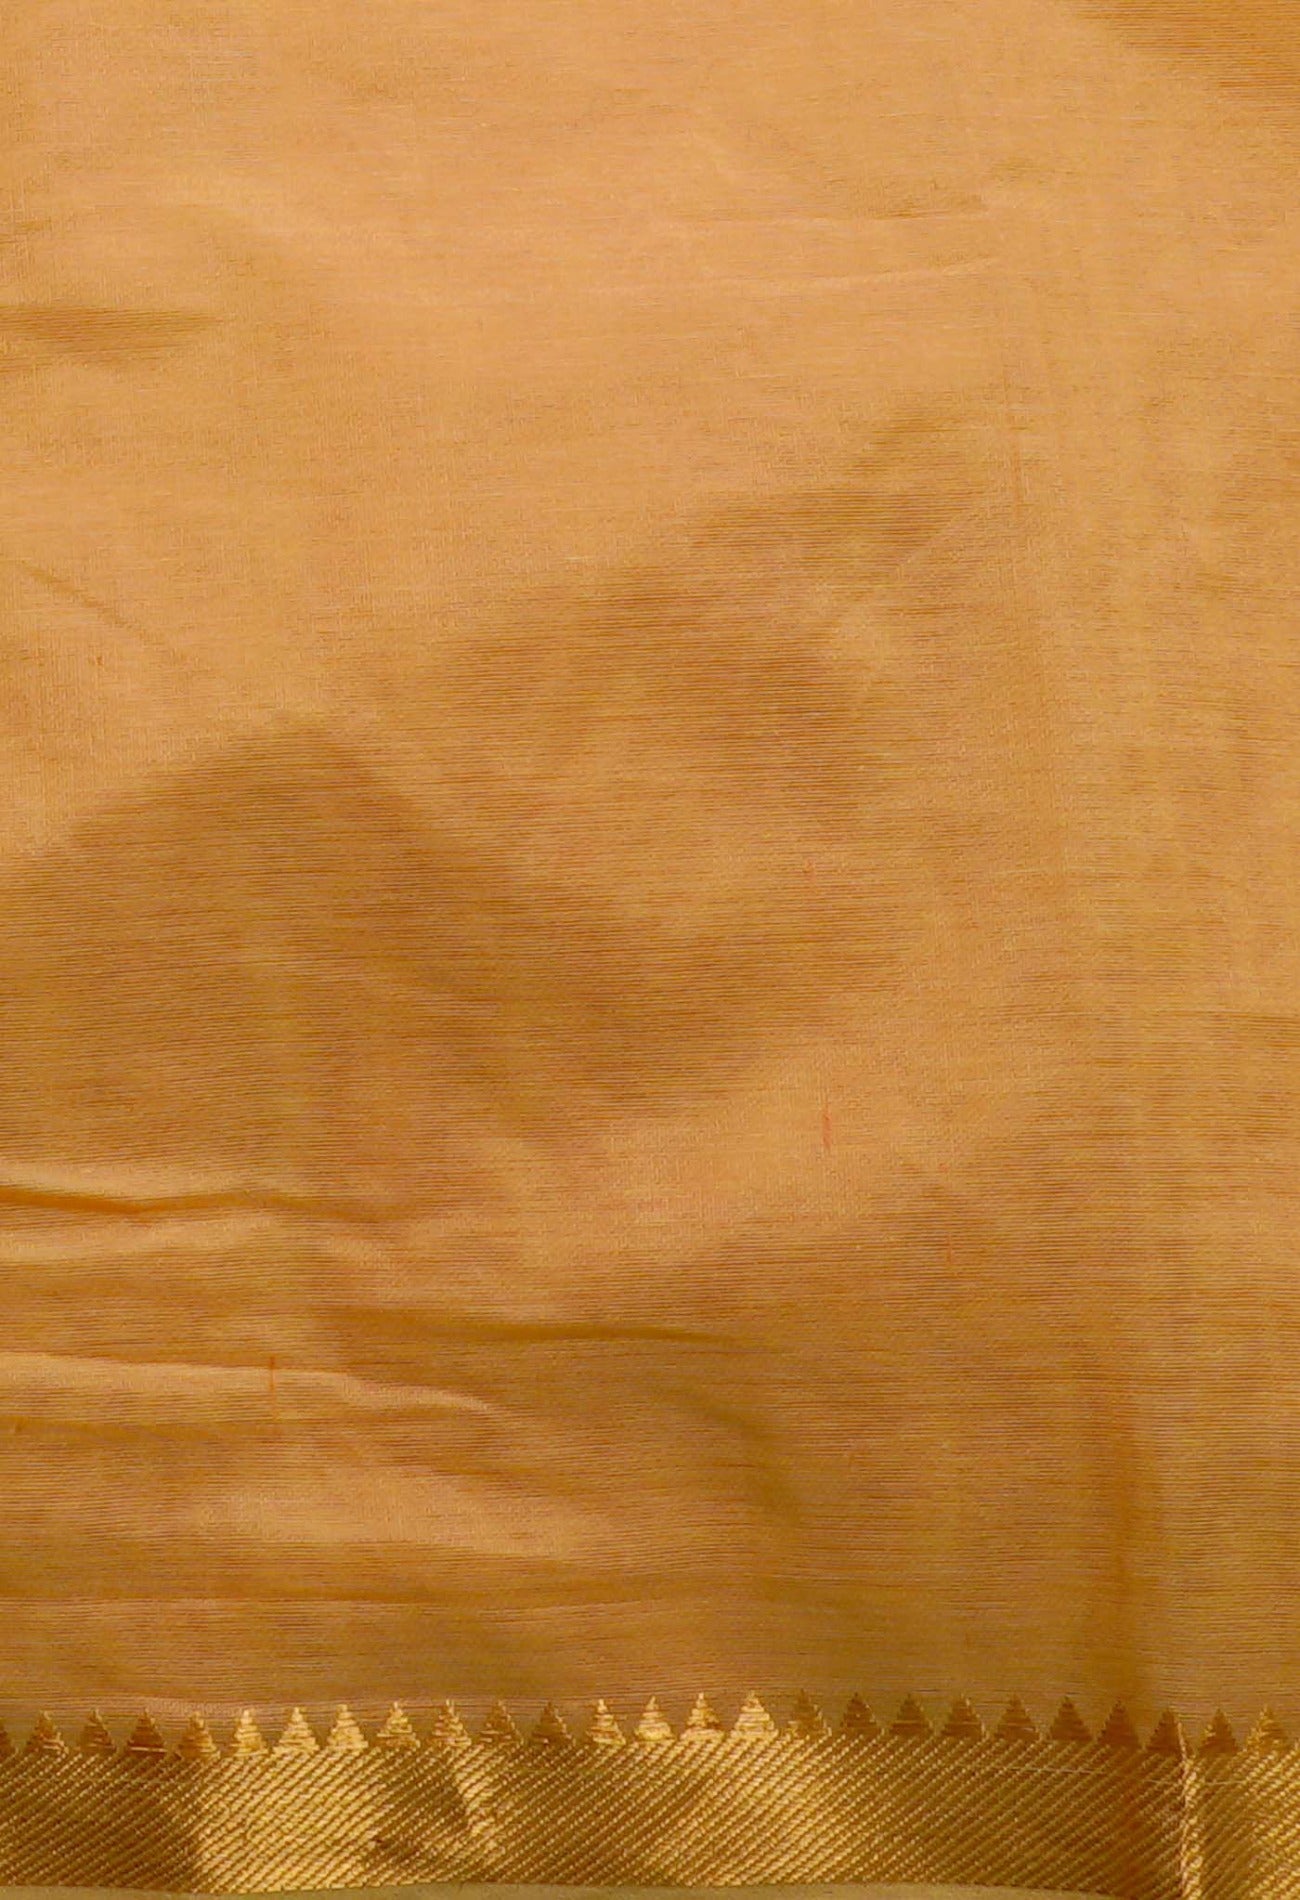 Online Shopping for Orange Pure Handloom Mangalagiri Silk Cotton Saree with Weaving from Andhra Pradesh at Unnatisilks.comIndia
